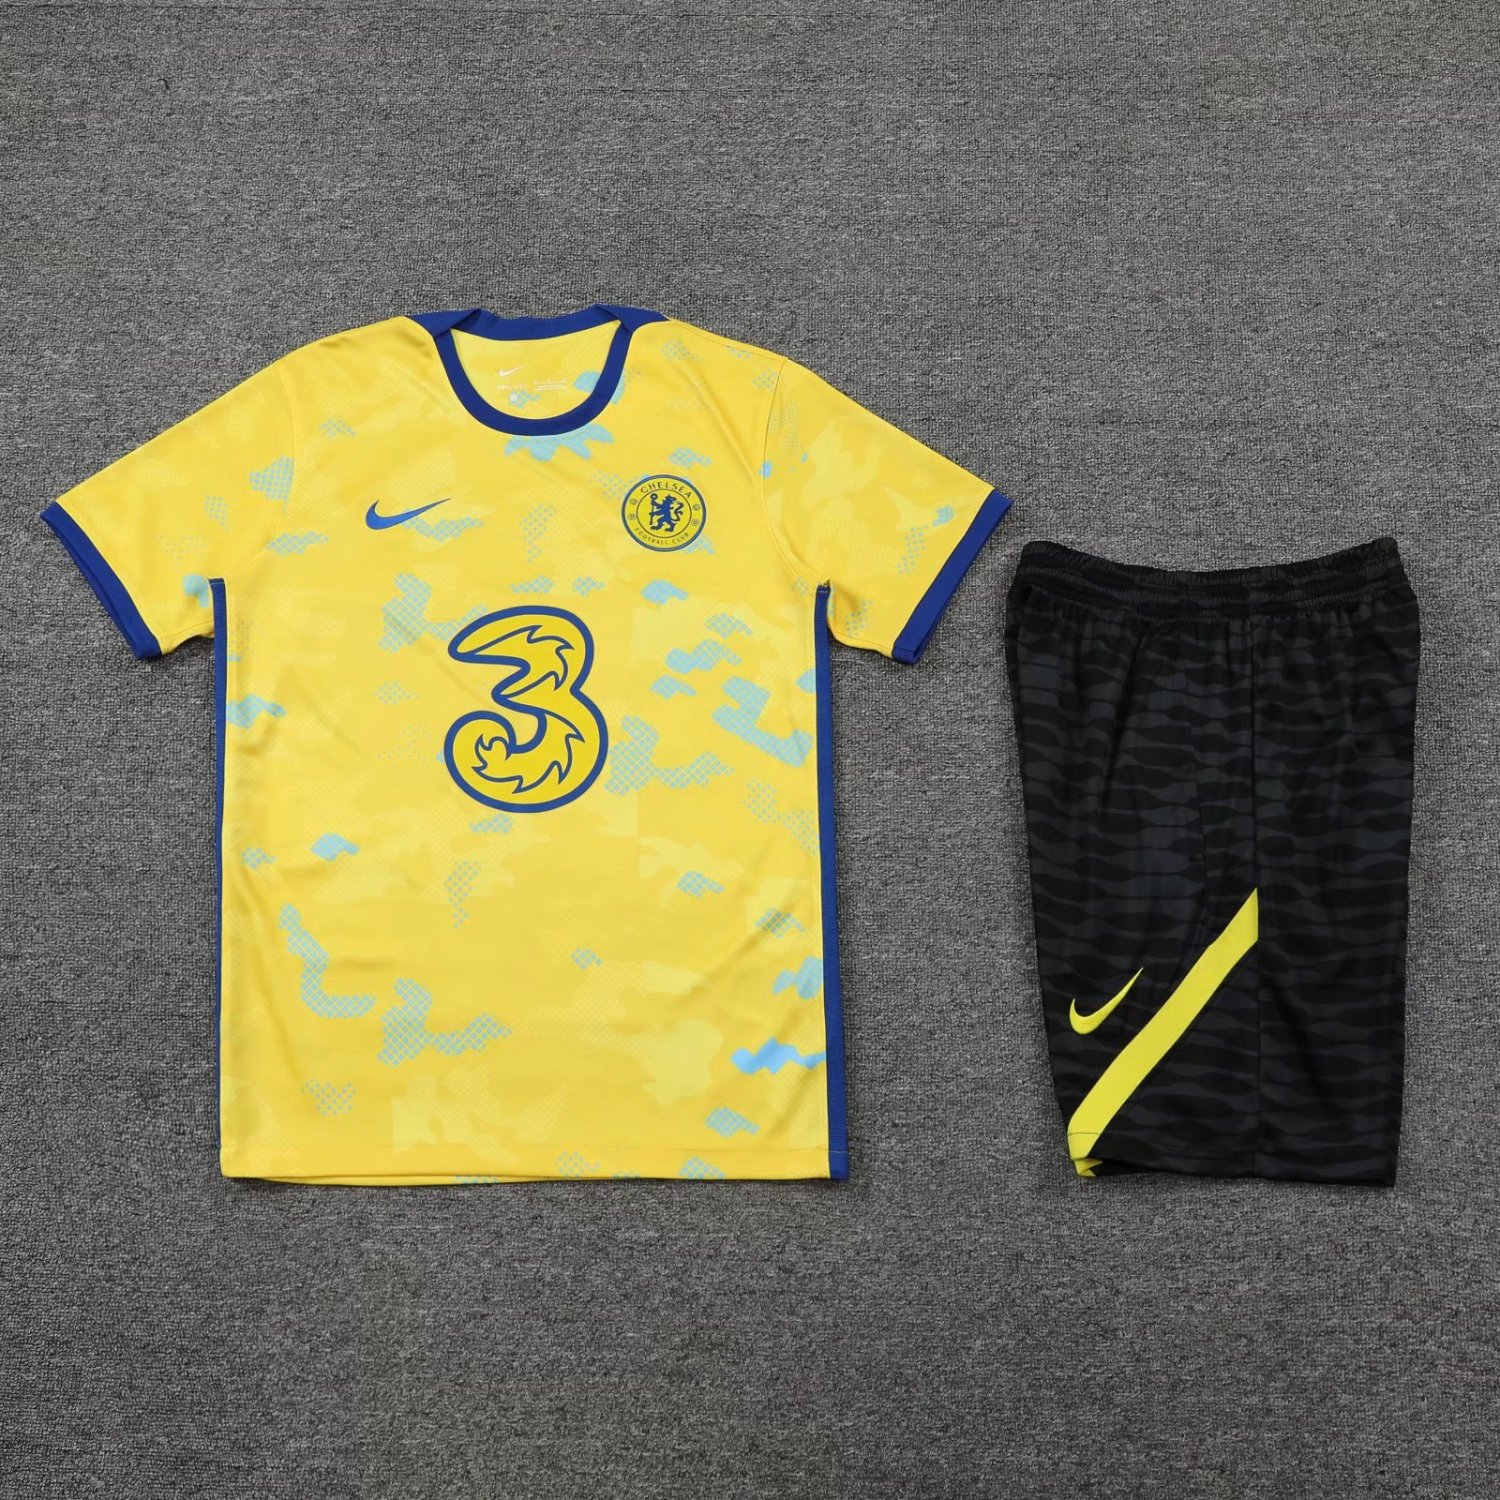 22-23 Chelsea Yellow Short Soccer Football Training Kit ( Top + Short ) Man